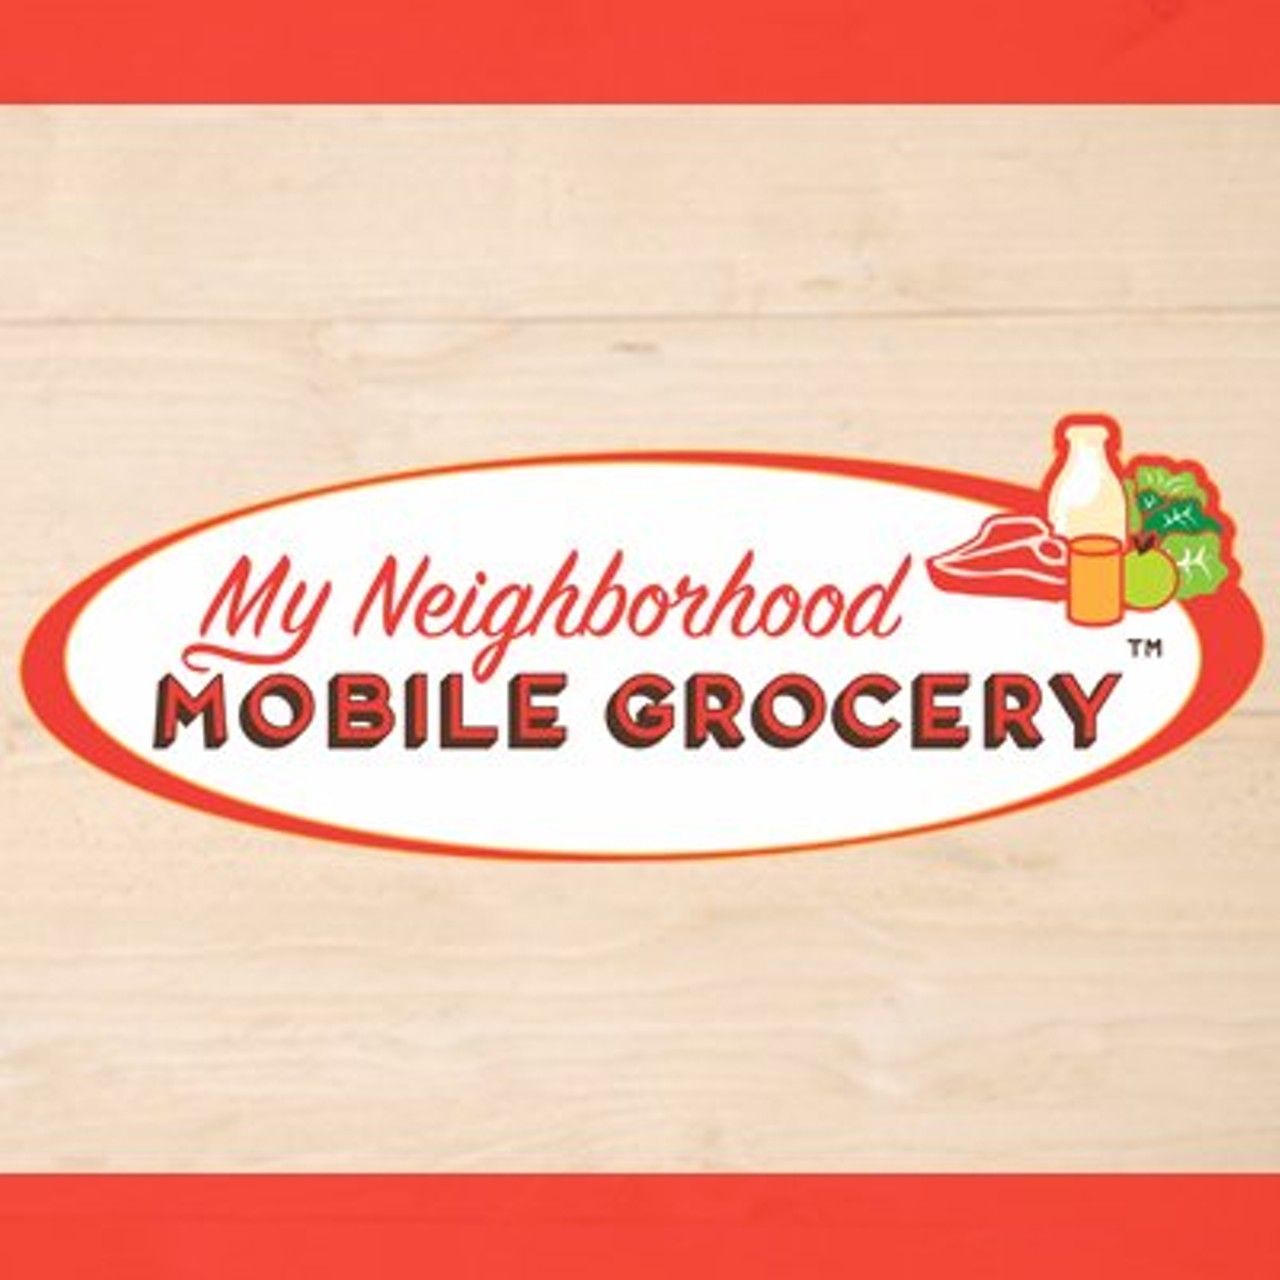 My Neighborhood Mobile Grocery
Volunteer here